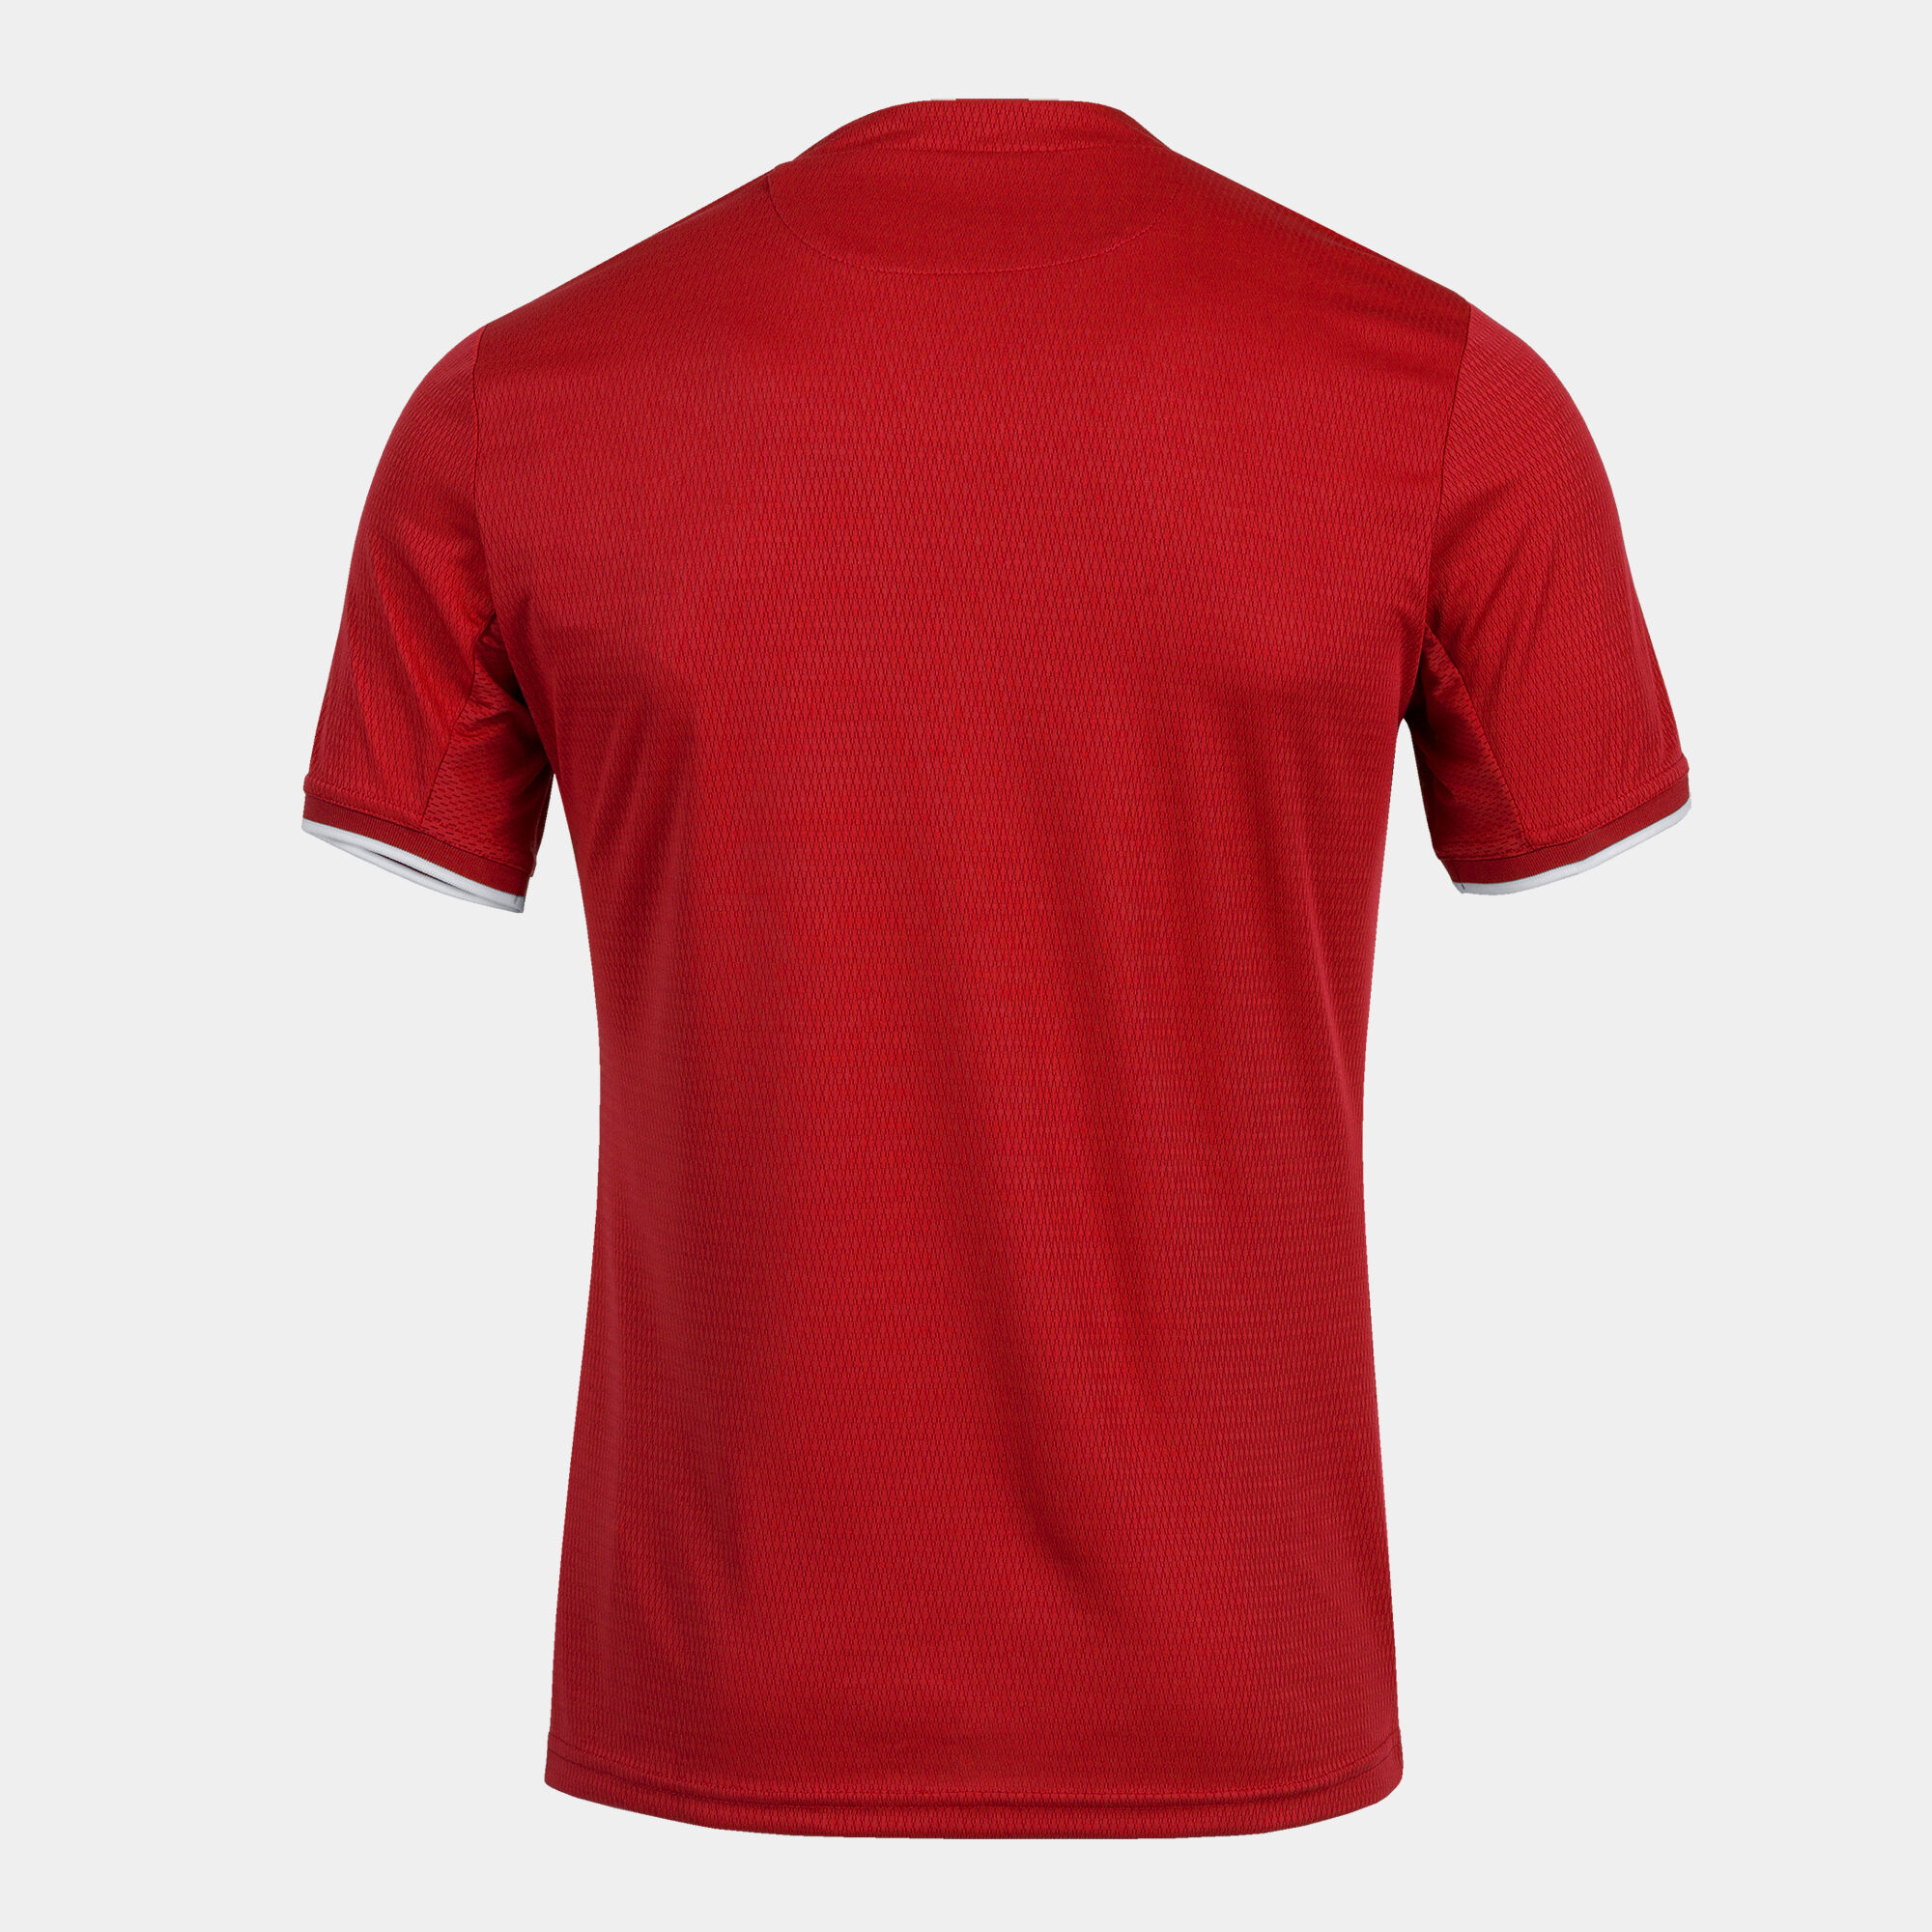 Camiseta manga corta hombre Toletum IV rojo blanco